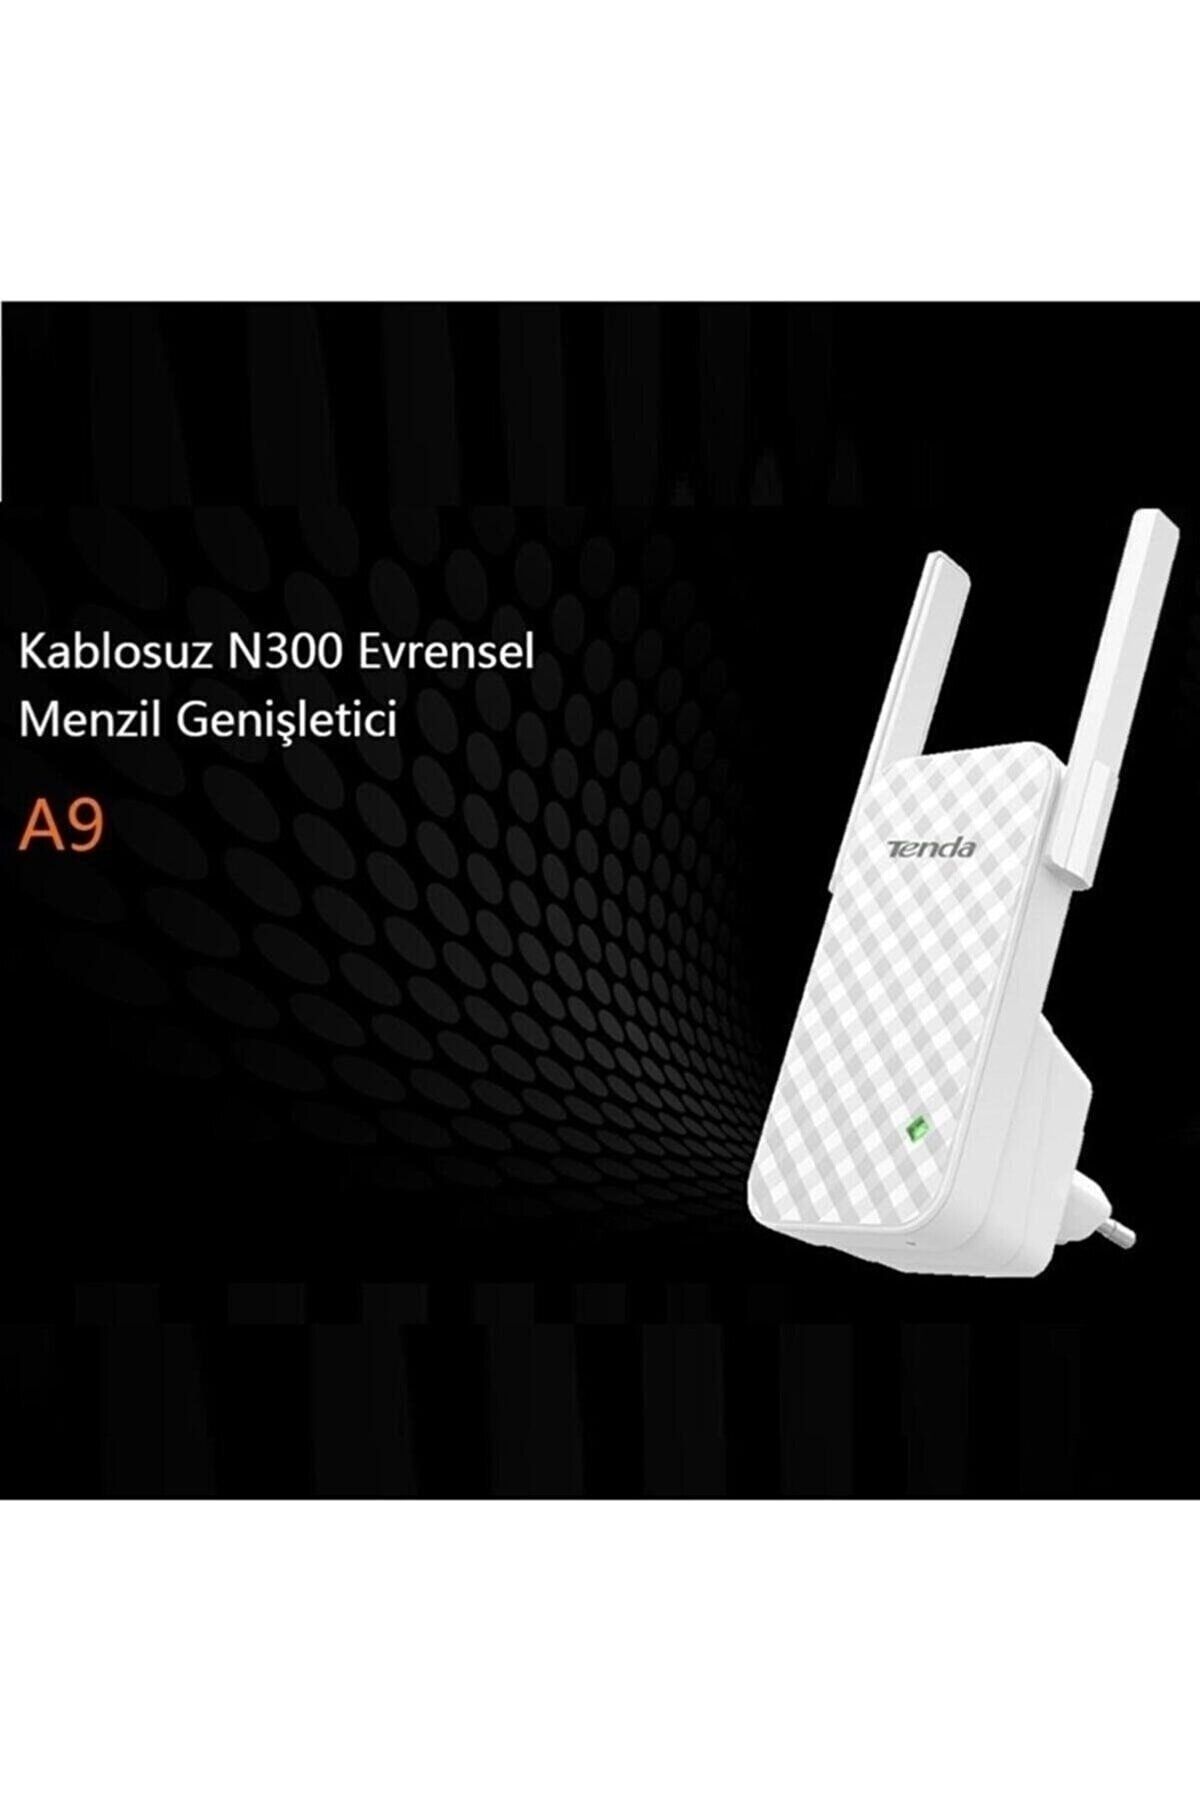 Tenda A9 300 Mbps Wifi-n 2 Antenli Sinyal Güçlendirici Access Point Repeater Menzil Genişletici